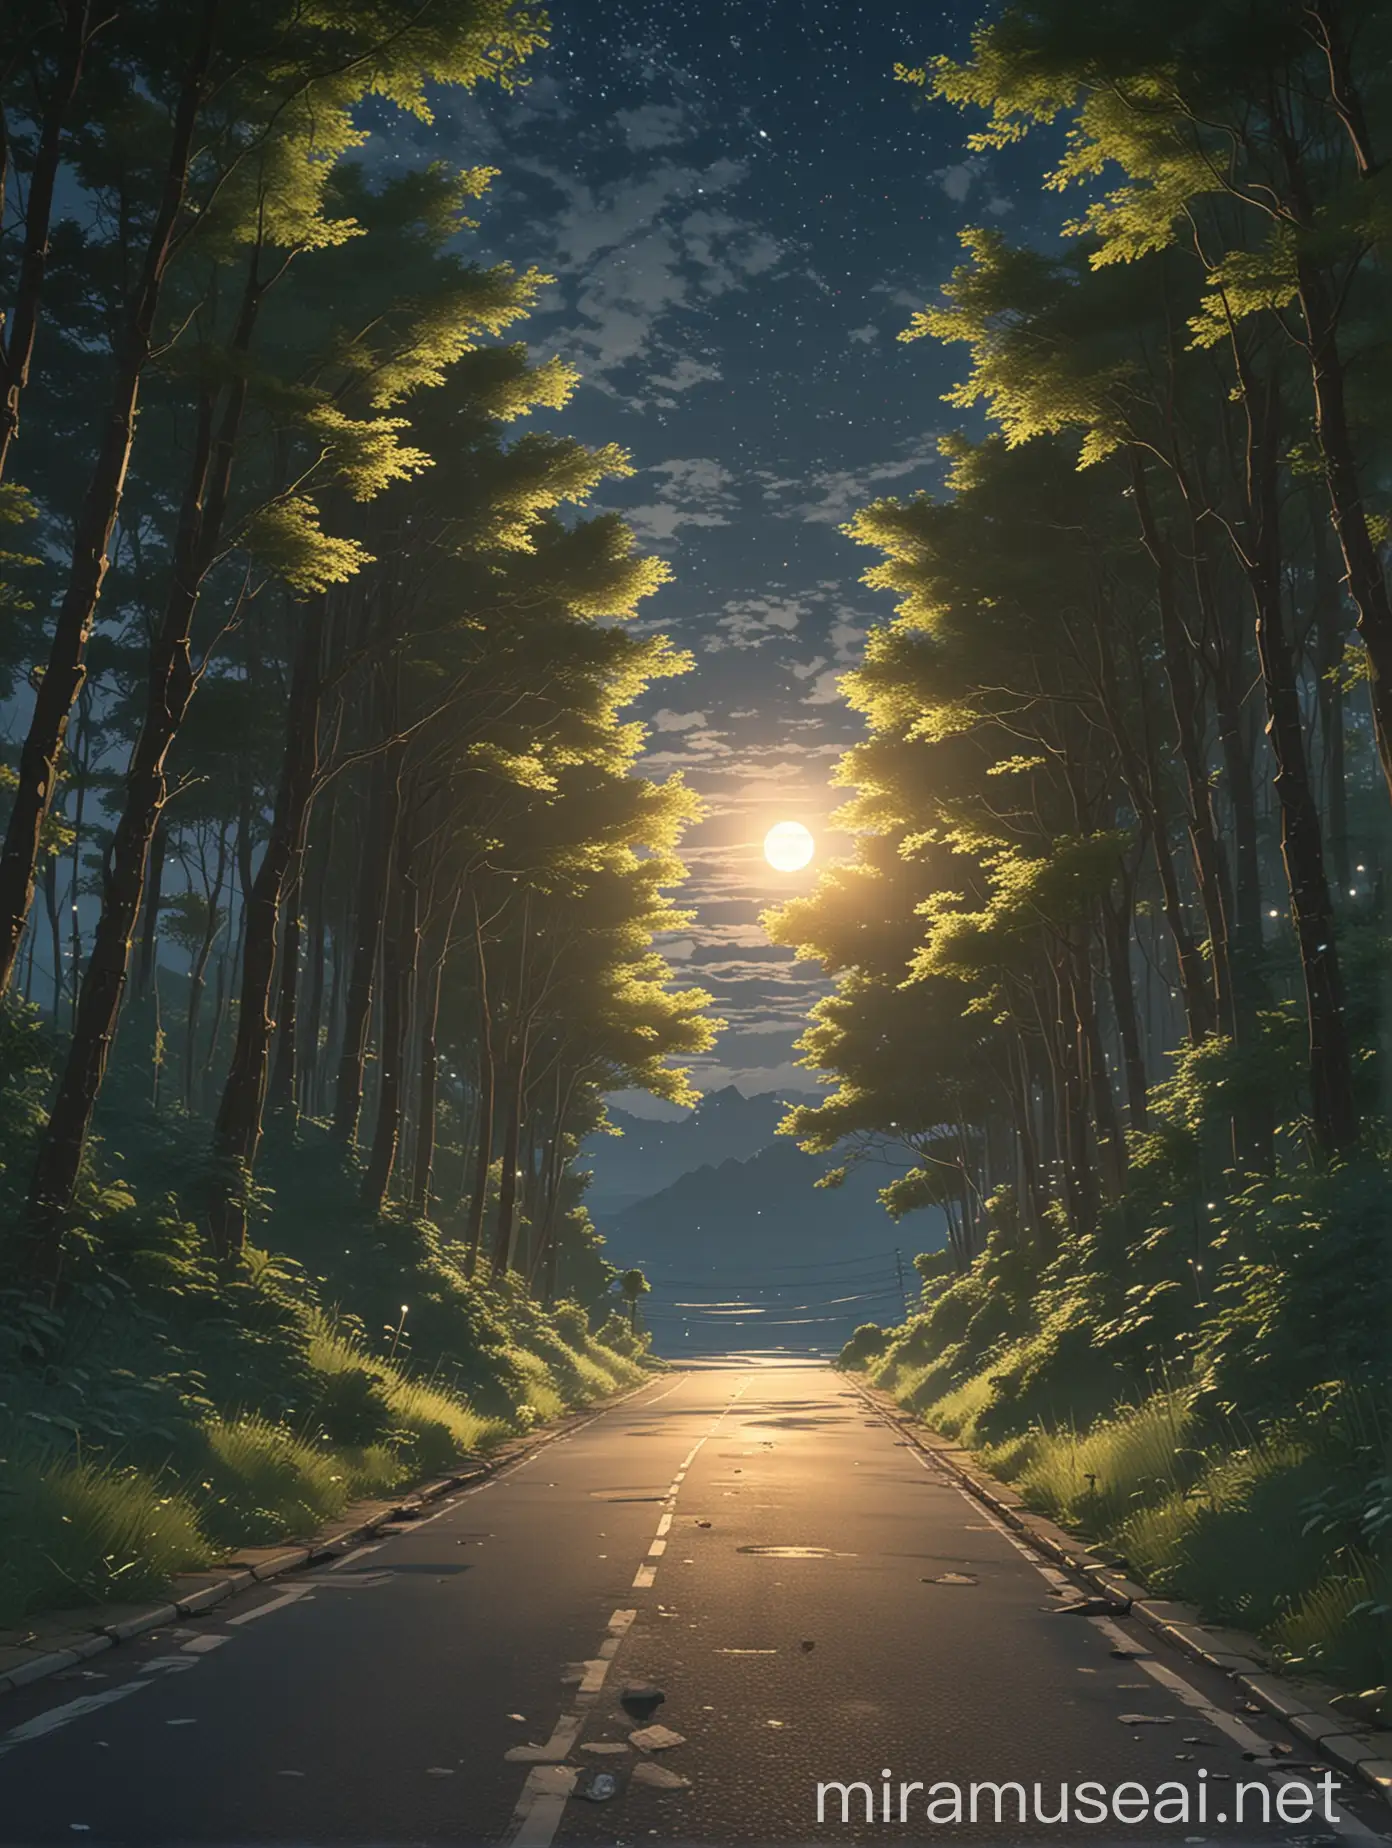 Serene Night Scene Moonlit Winding Road Through Lush Forest